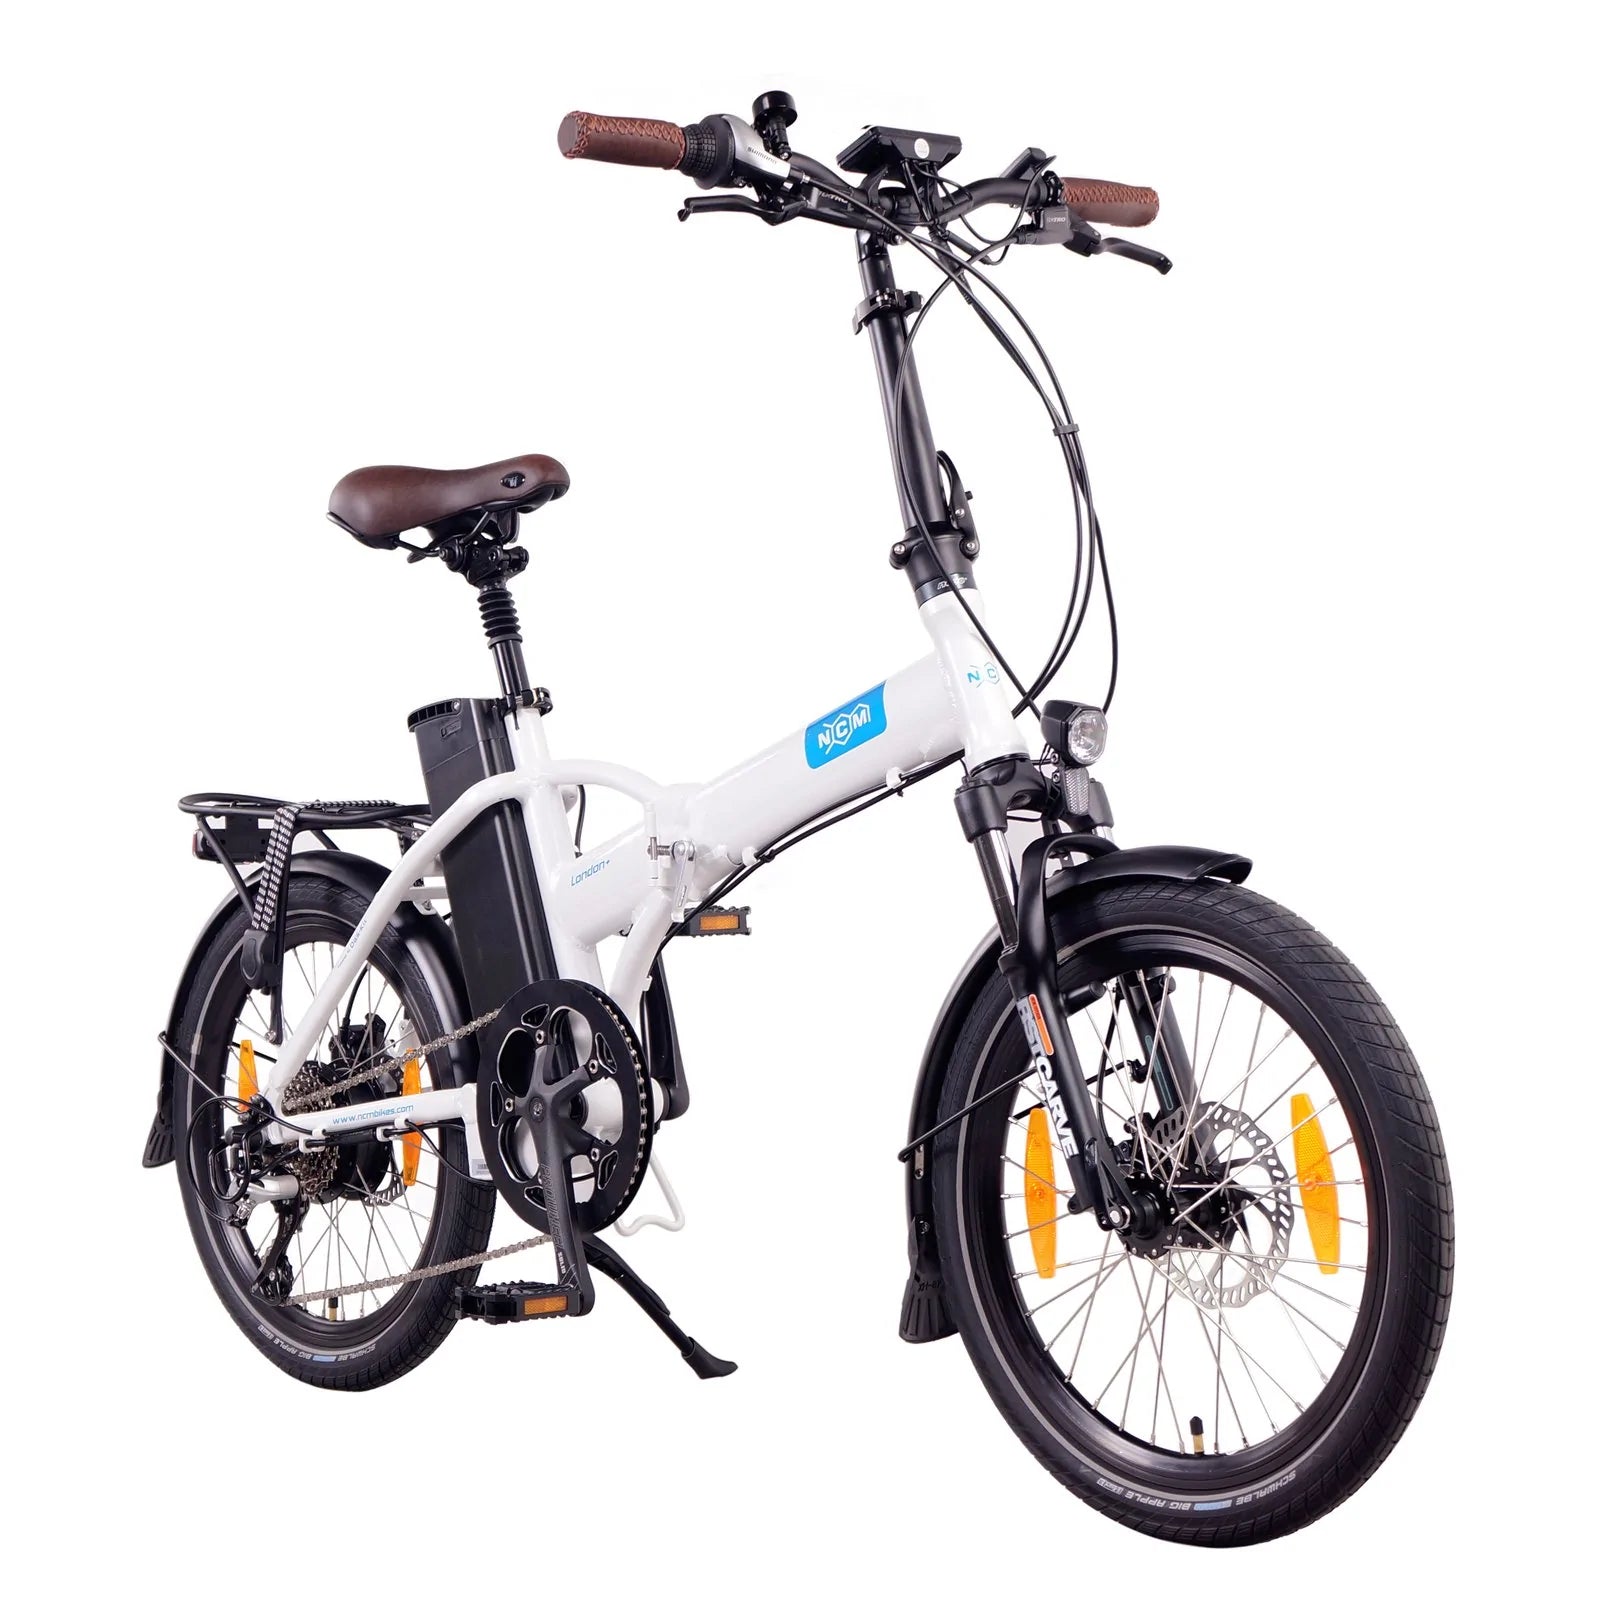 NCM London+ Folding E-Bike, 250W, 36V 19Ah 684Wh Battery, 20 | Leon Cycle Ebikes